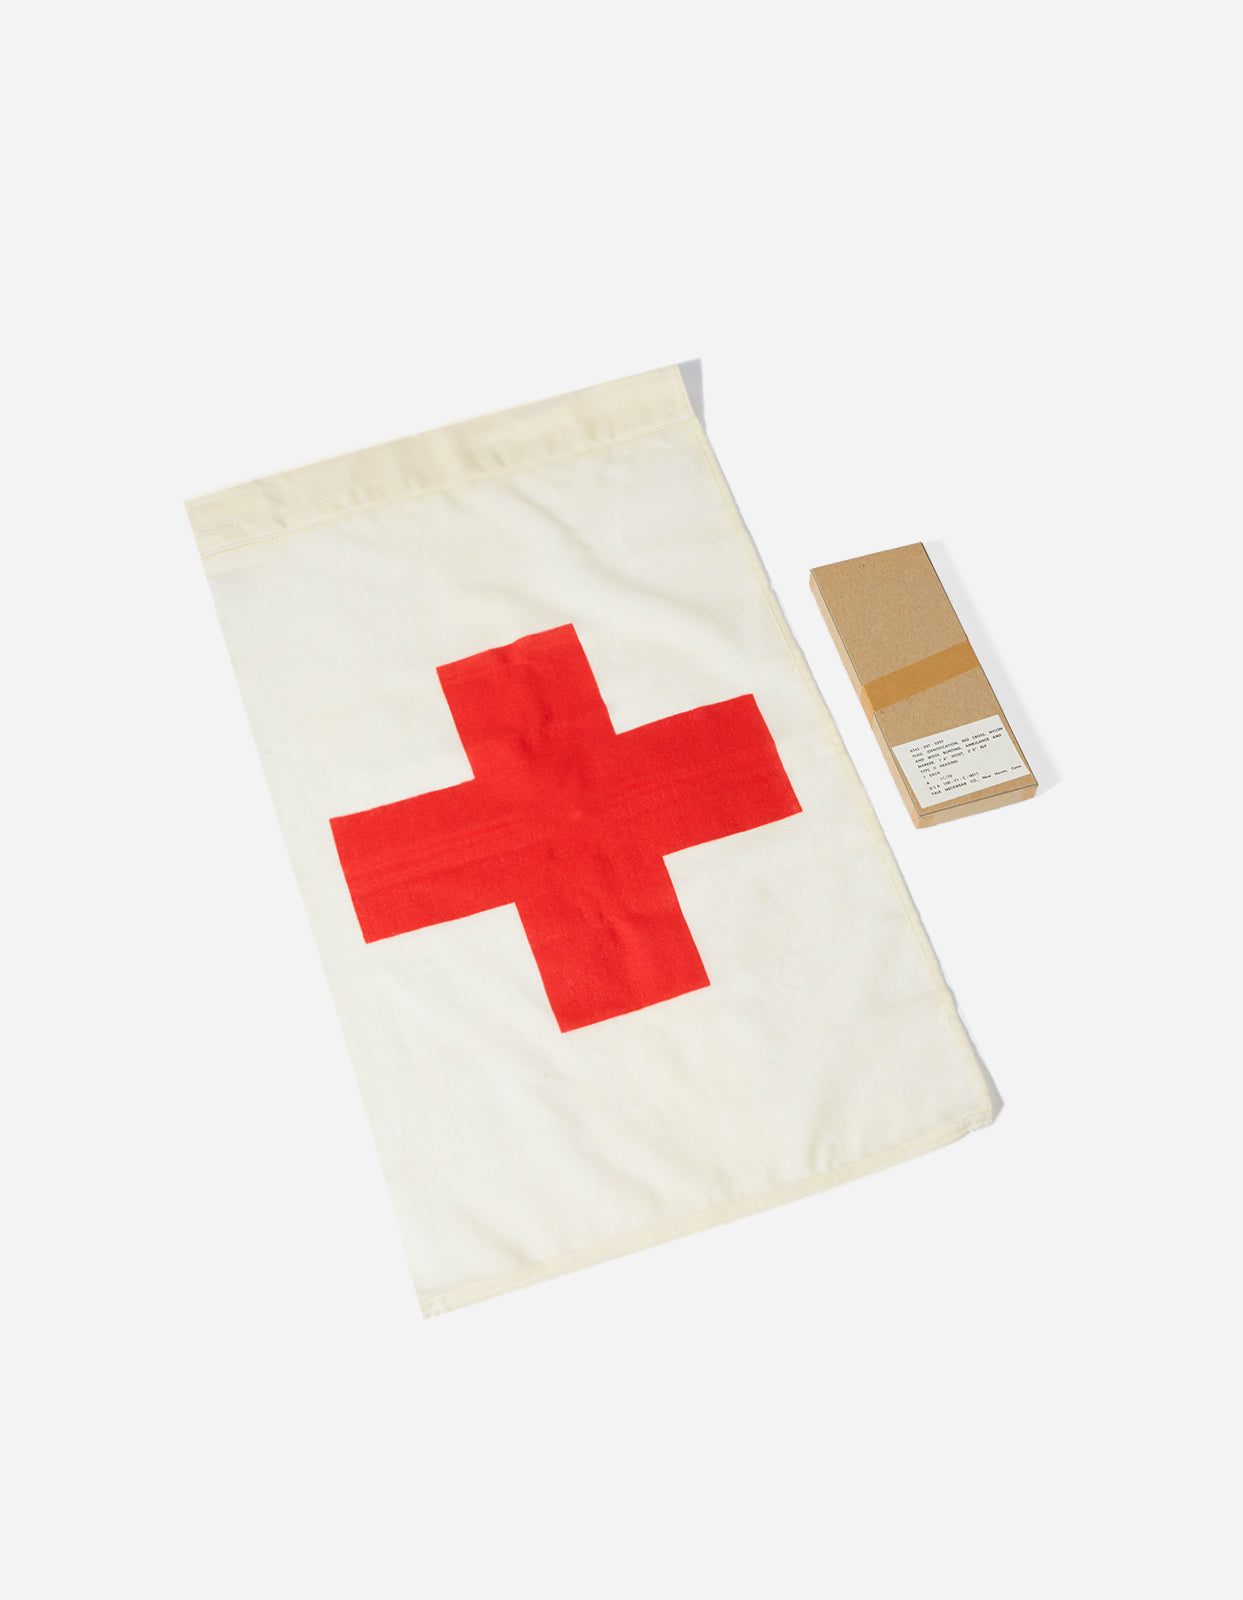 9424 Red Cross Identification Flag (Box of 12)